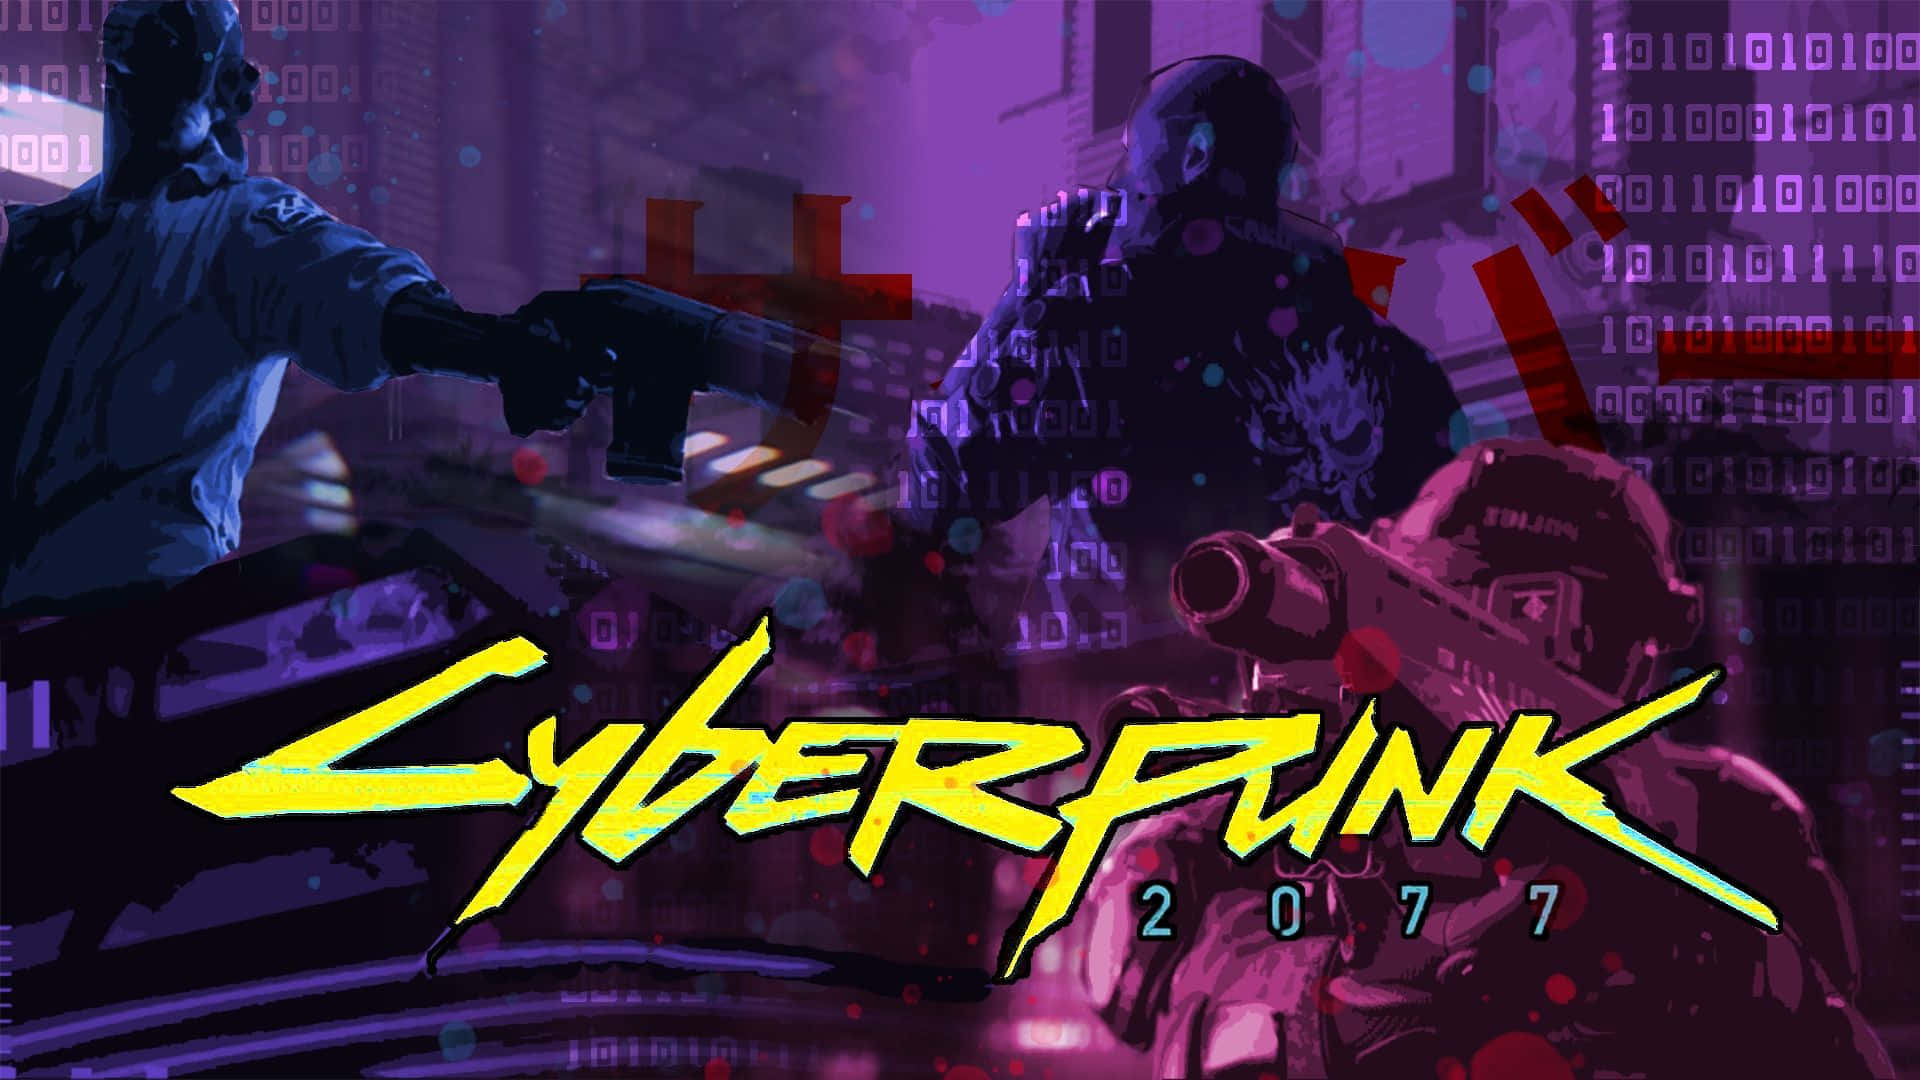 cyberpunk 2077 pc wallpaper hd 1080p